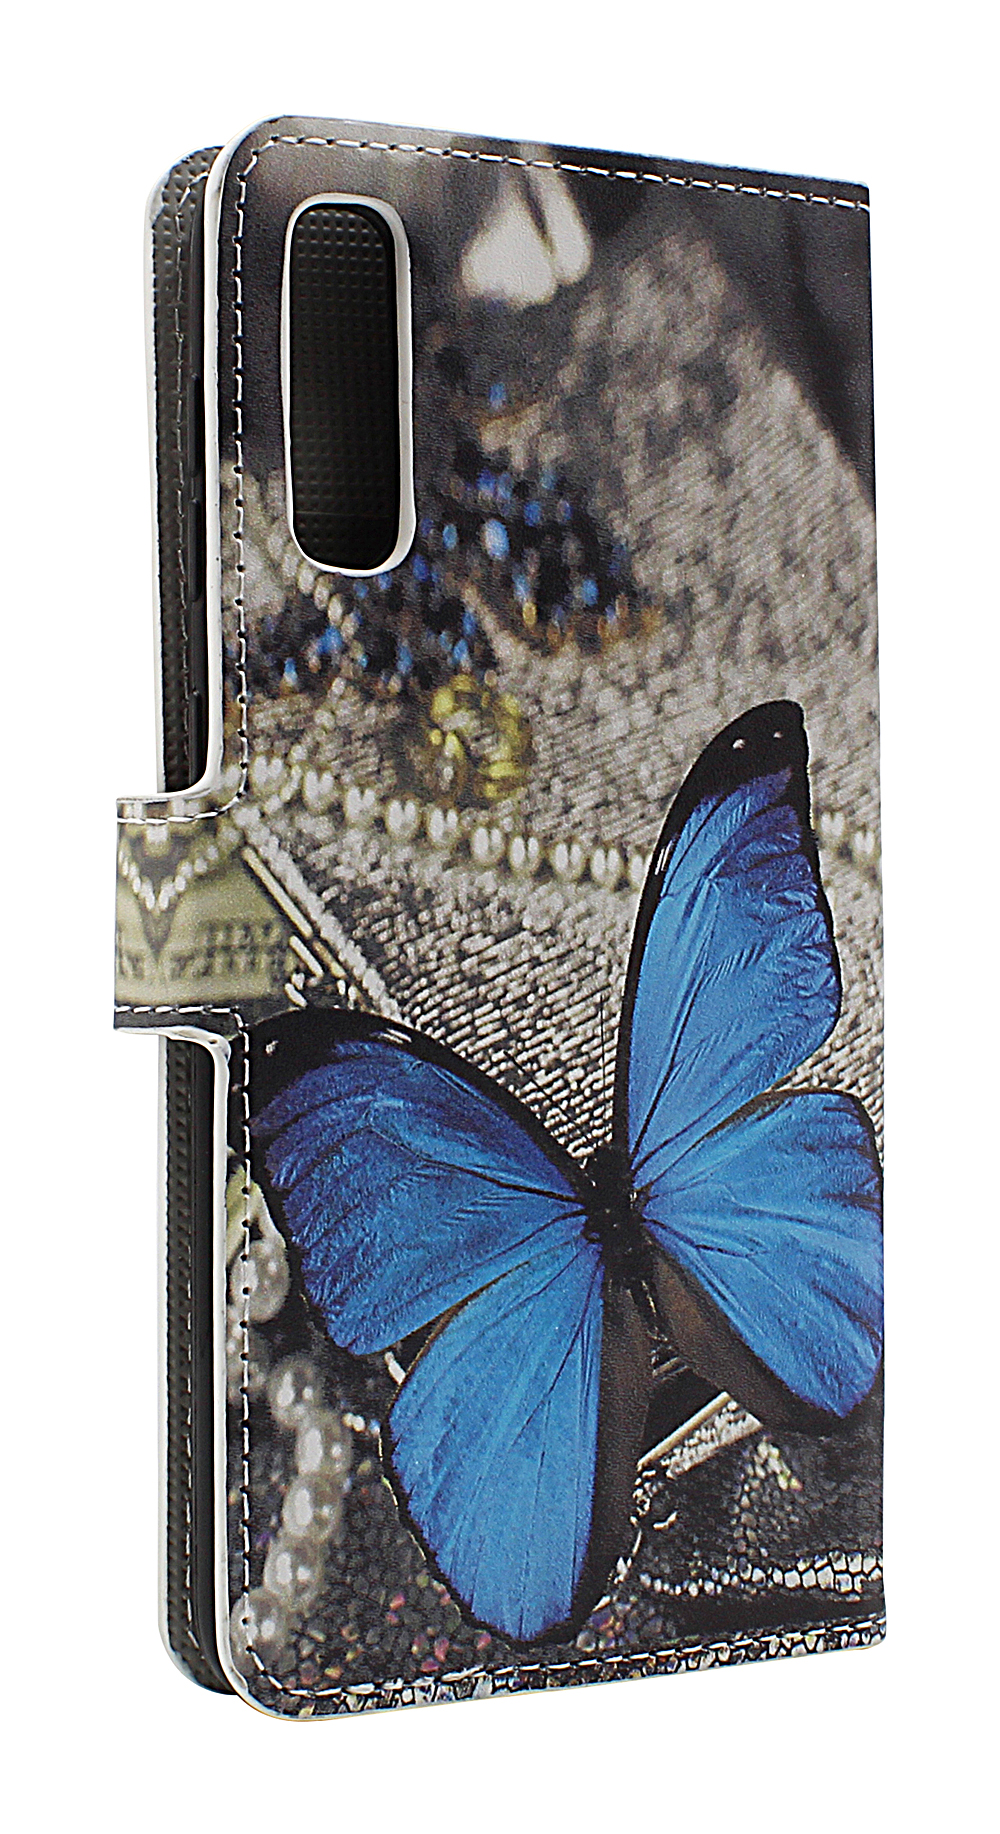 Designwallet Samsung Galaxy A50 (A505FN/DS)